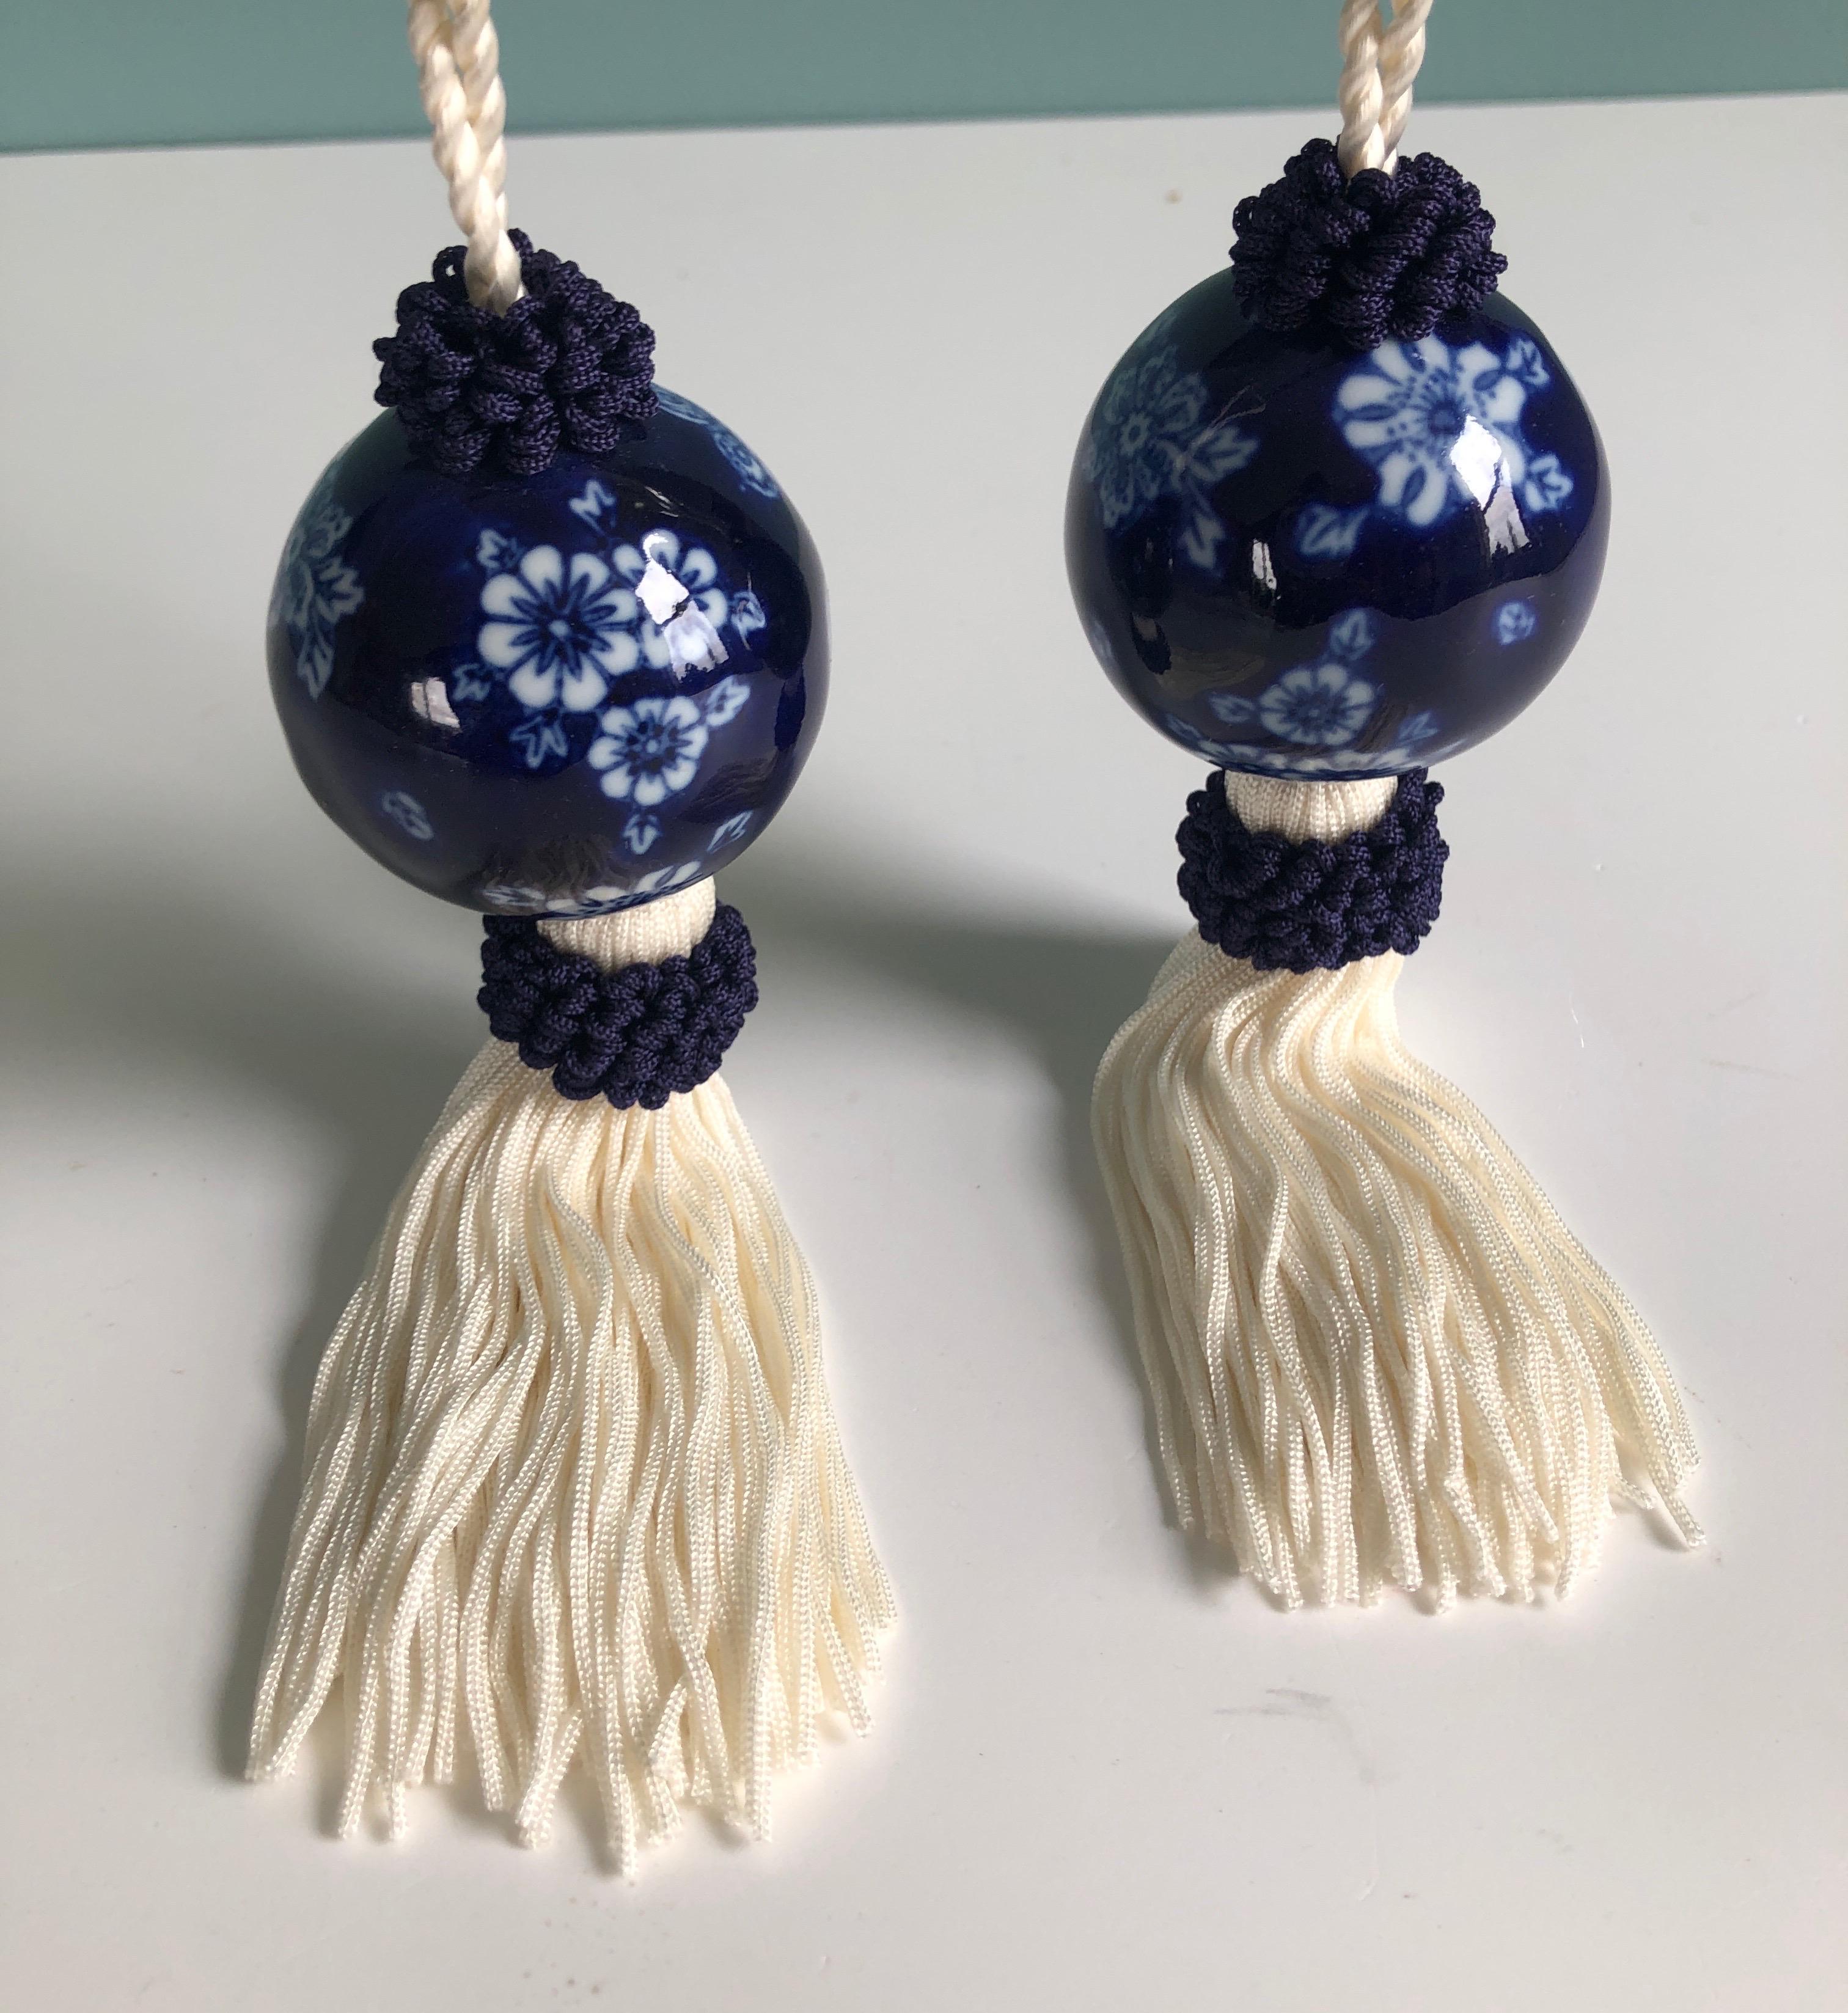 Bohemian Pair of Blue and White Ceramic Decorative Key Tassels